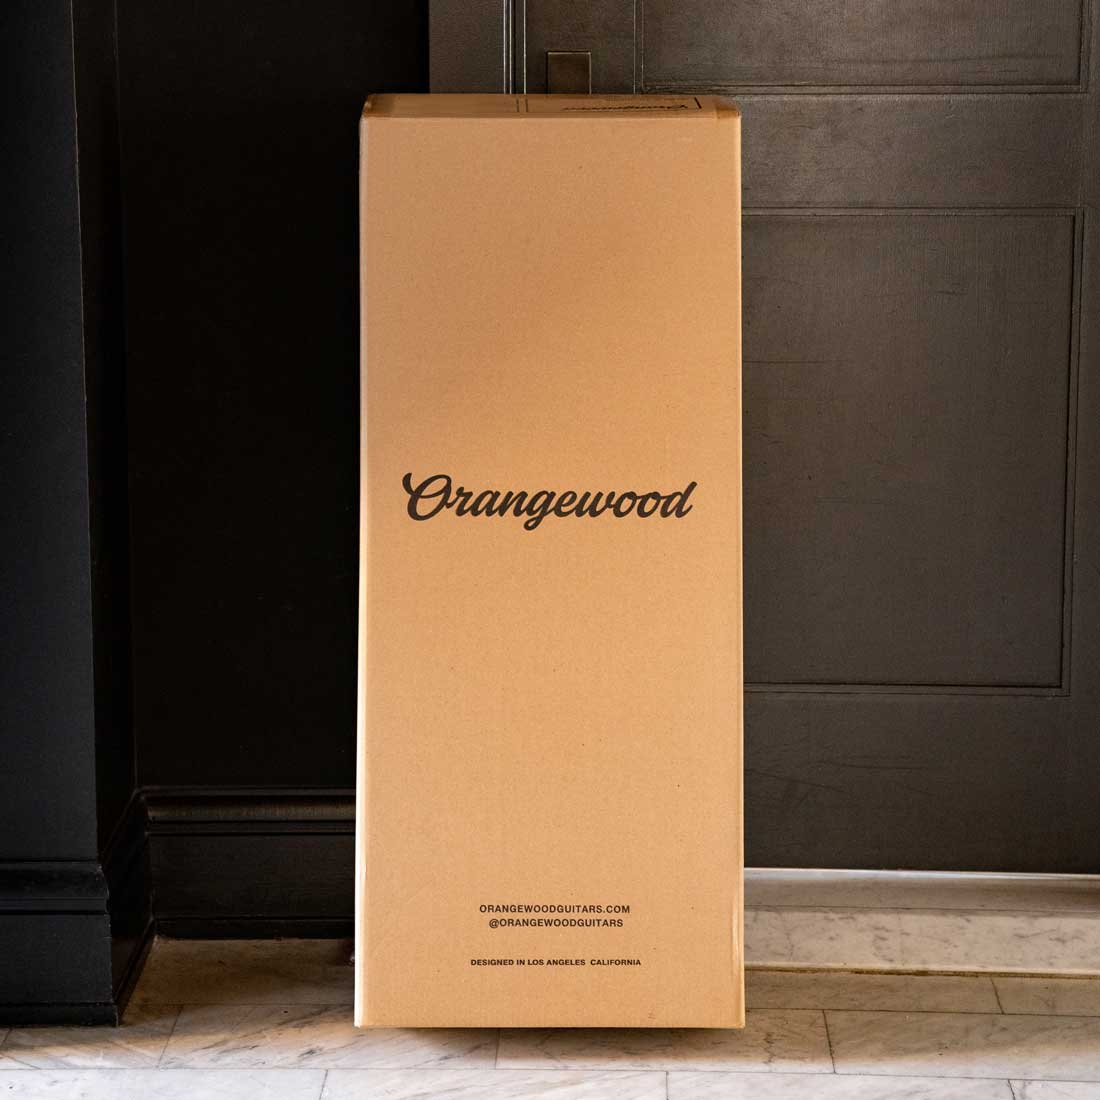 Orangewood branded box